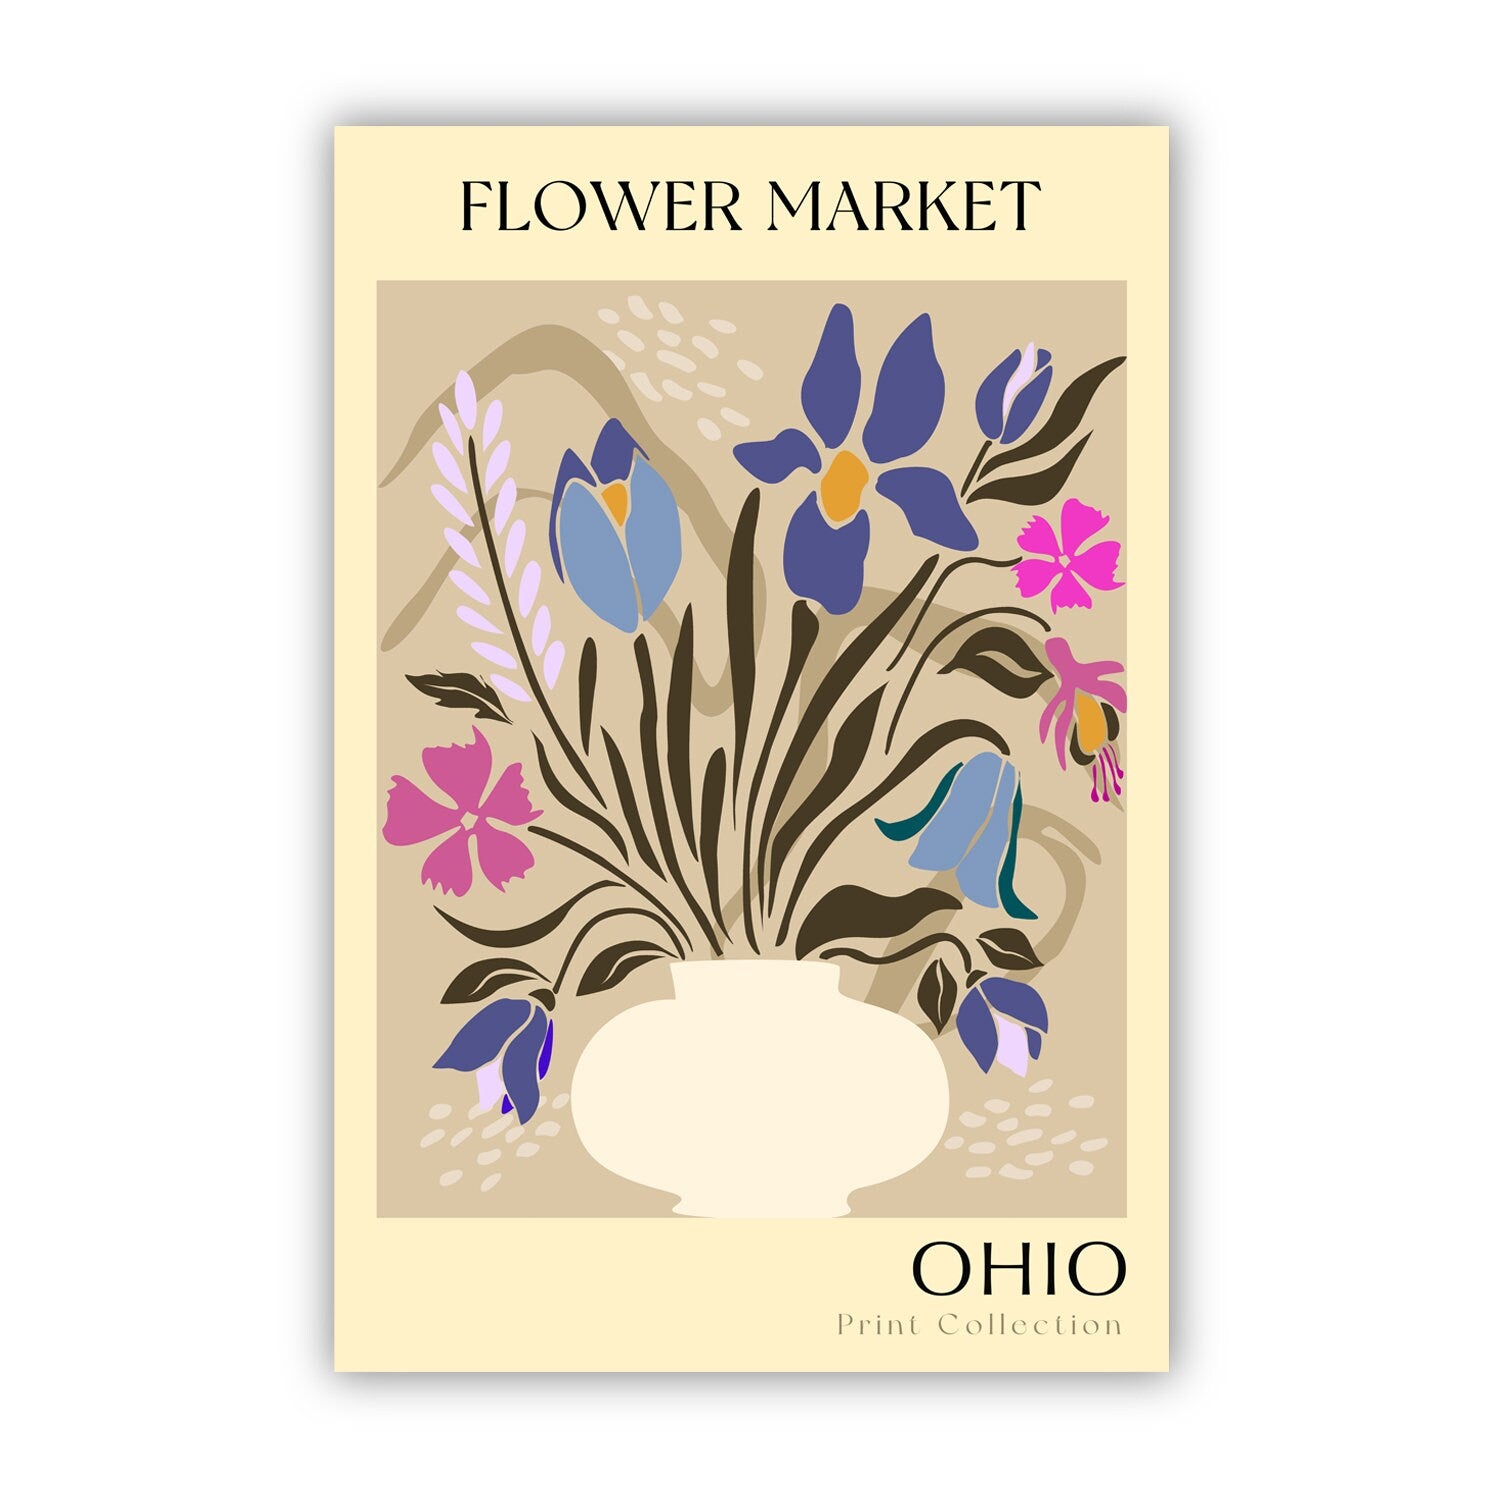 Ohio State flower print, USA states poster, Ohio flower market poster, Botanical poster, Nature poster artwork, Boho floral wall art